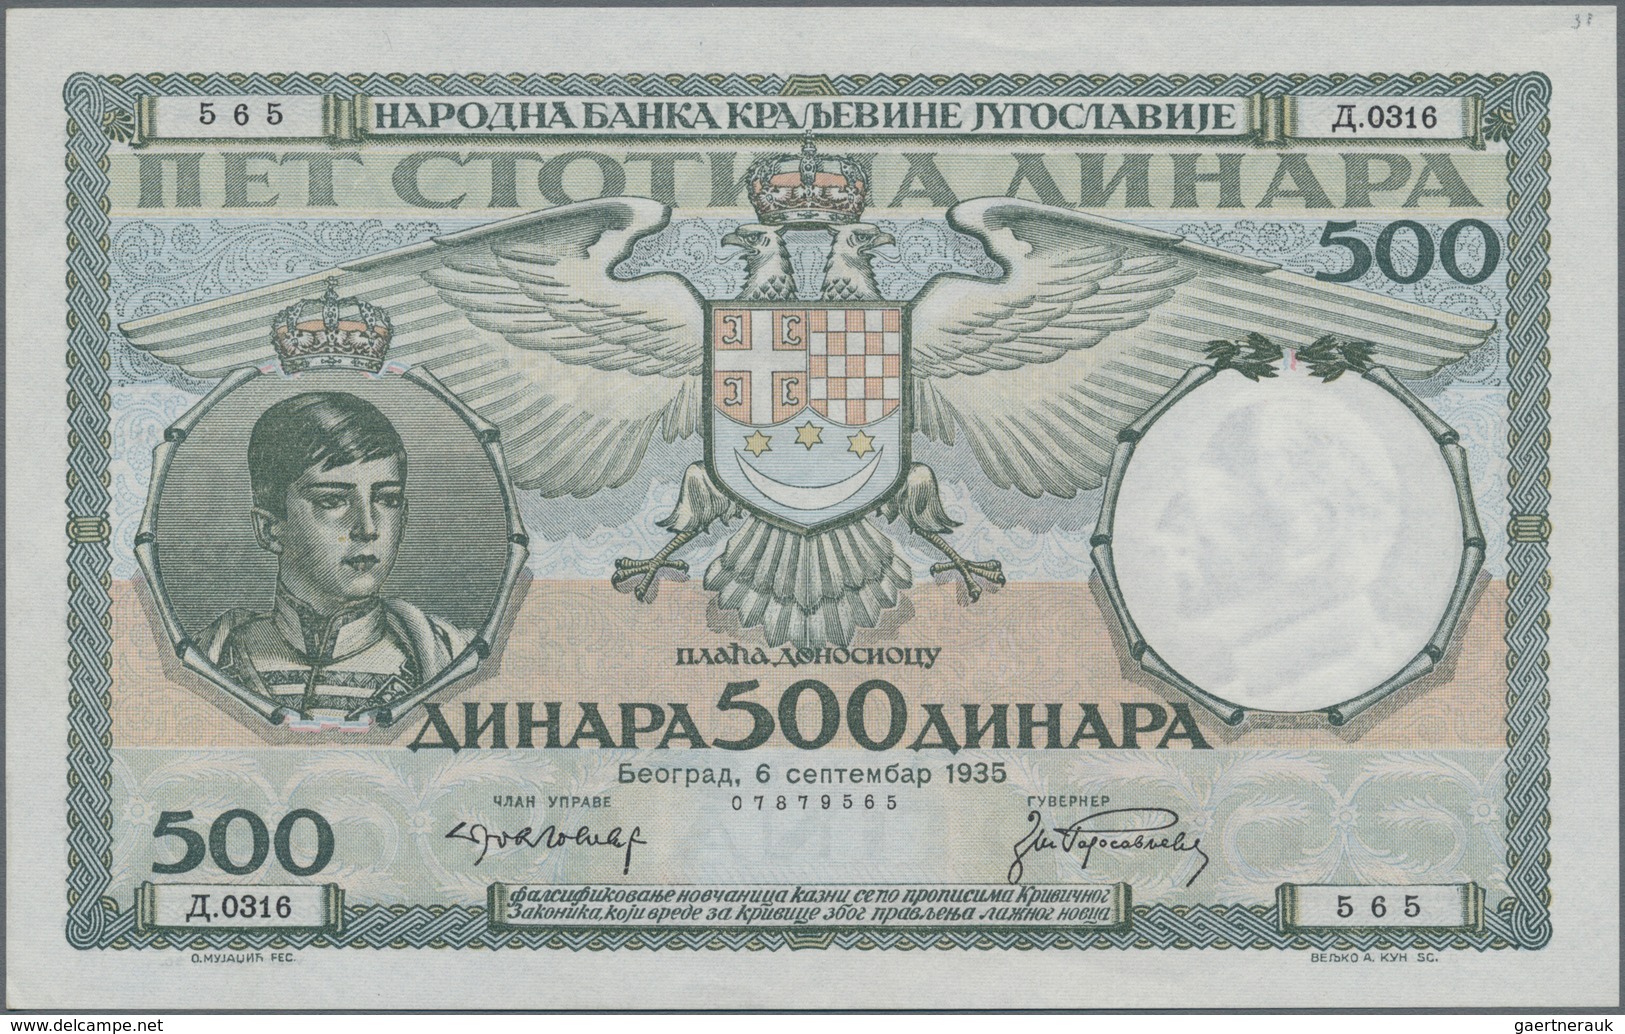 Yugoslavia / Jugoslavien: Kingdom of Yugoslavia set with 5 banknotes comprising 20, 100, 500 and 100